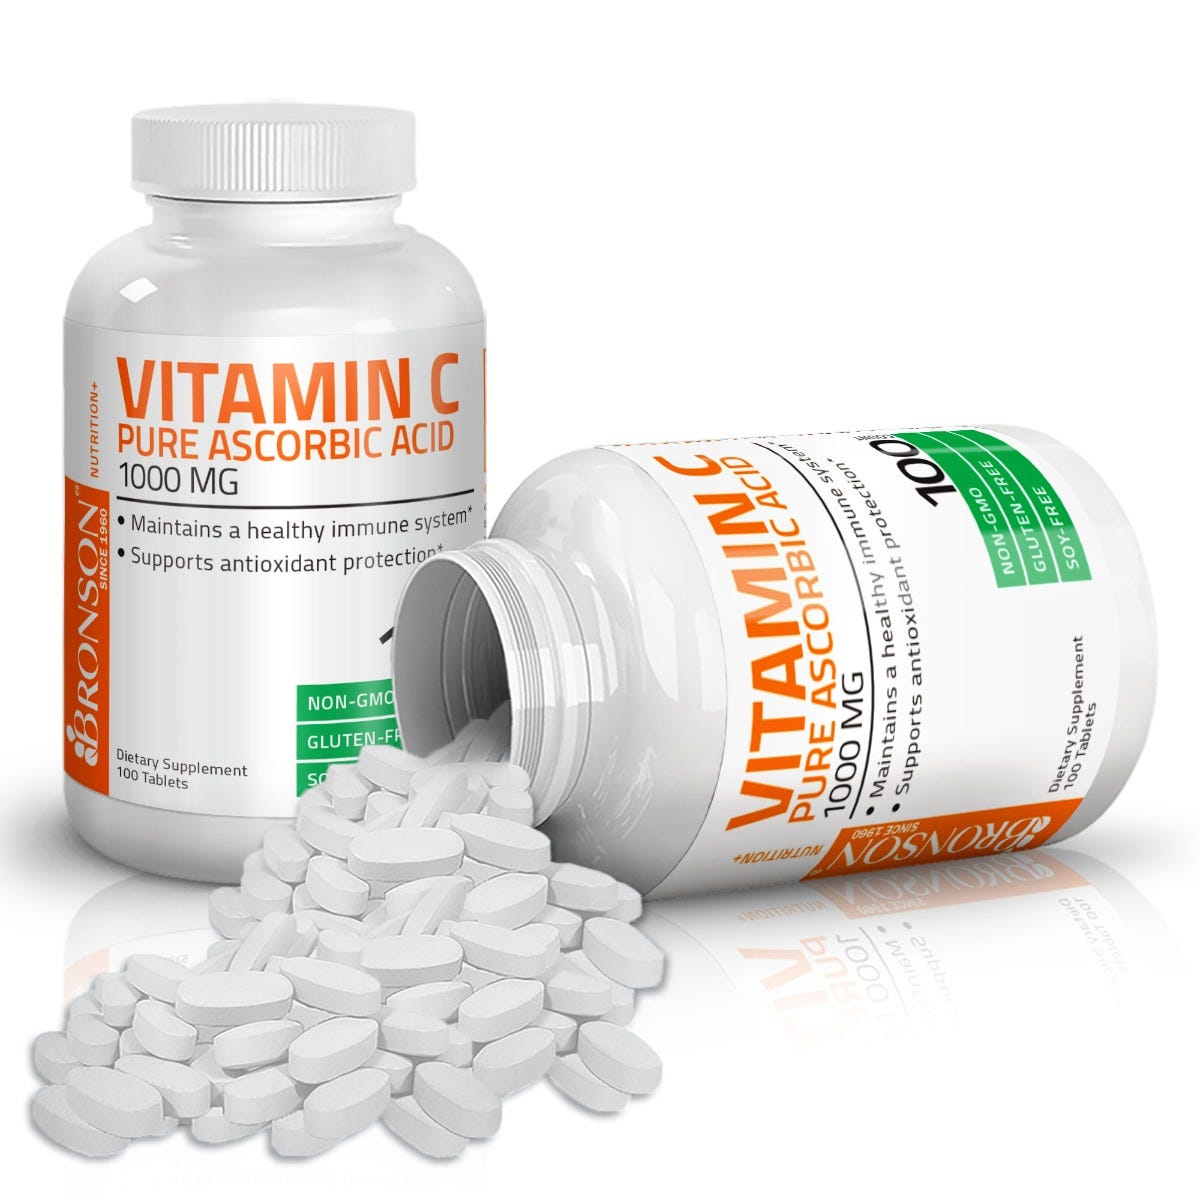 Vitamin C Pure Ascorbic Acid - 1,000 mg view 3 of 6